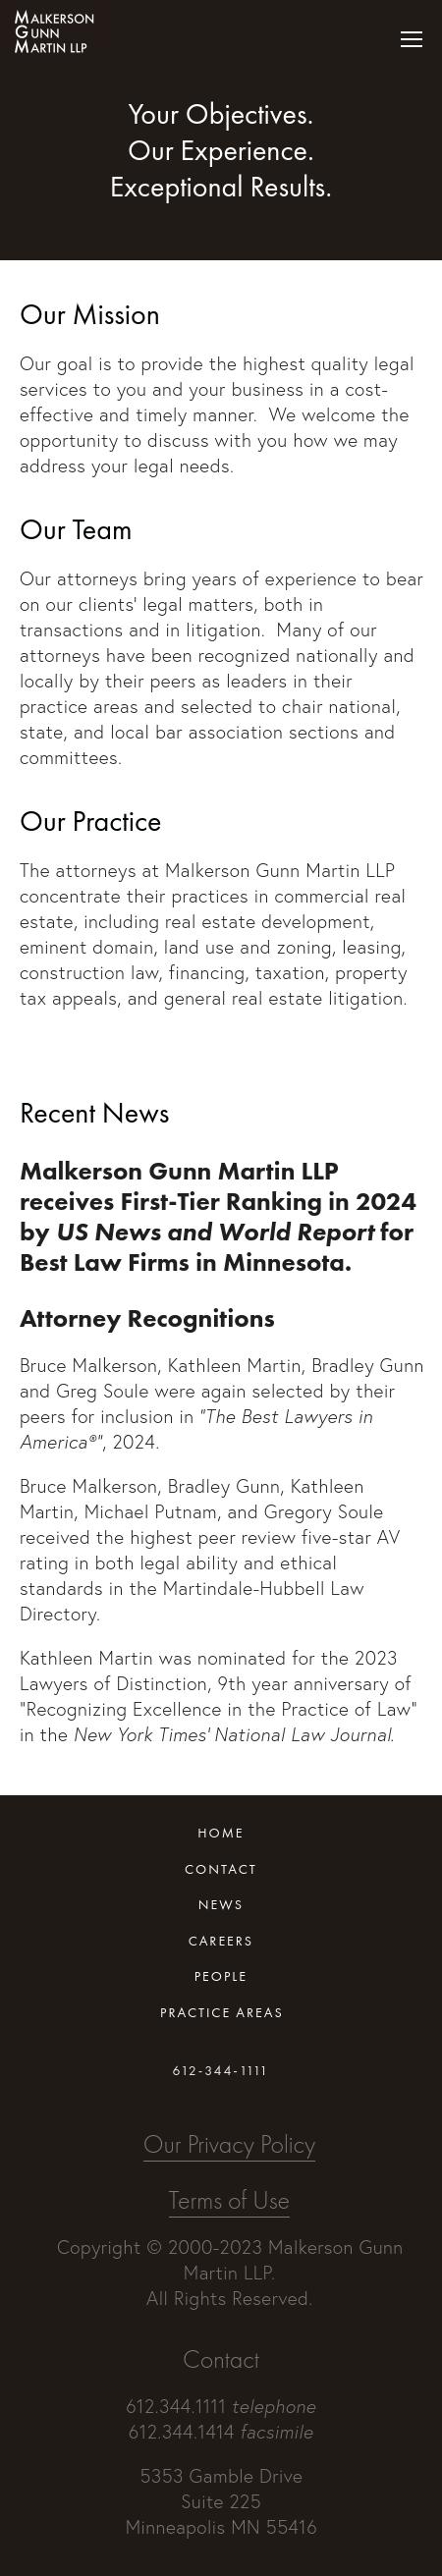 Malkerson Gunn Martin LLP - Minneapolis MN Lawyers